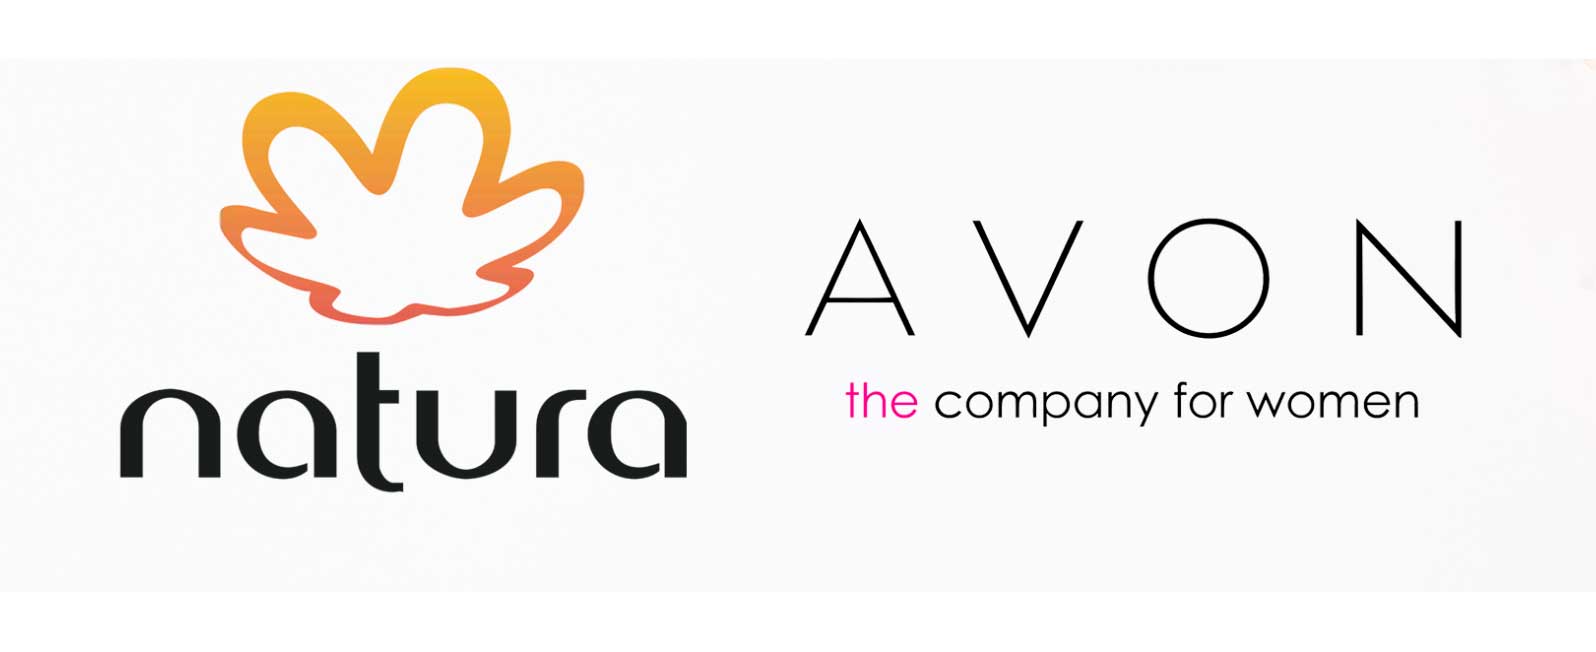 Natura concluiu a compra da marca Avon e se torna a 4ª maior